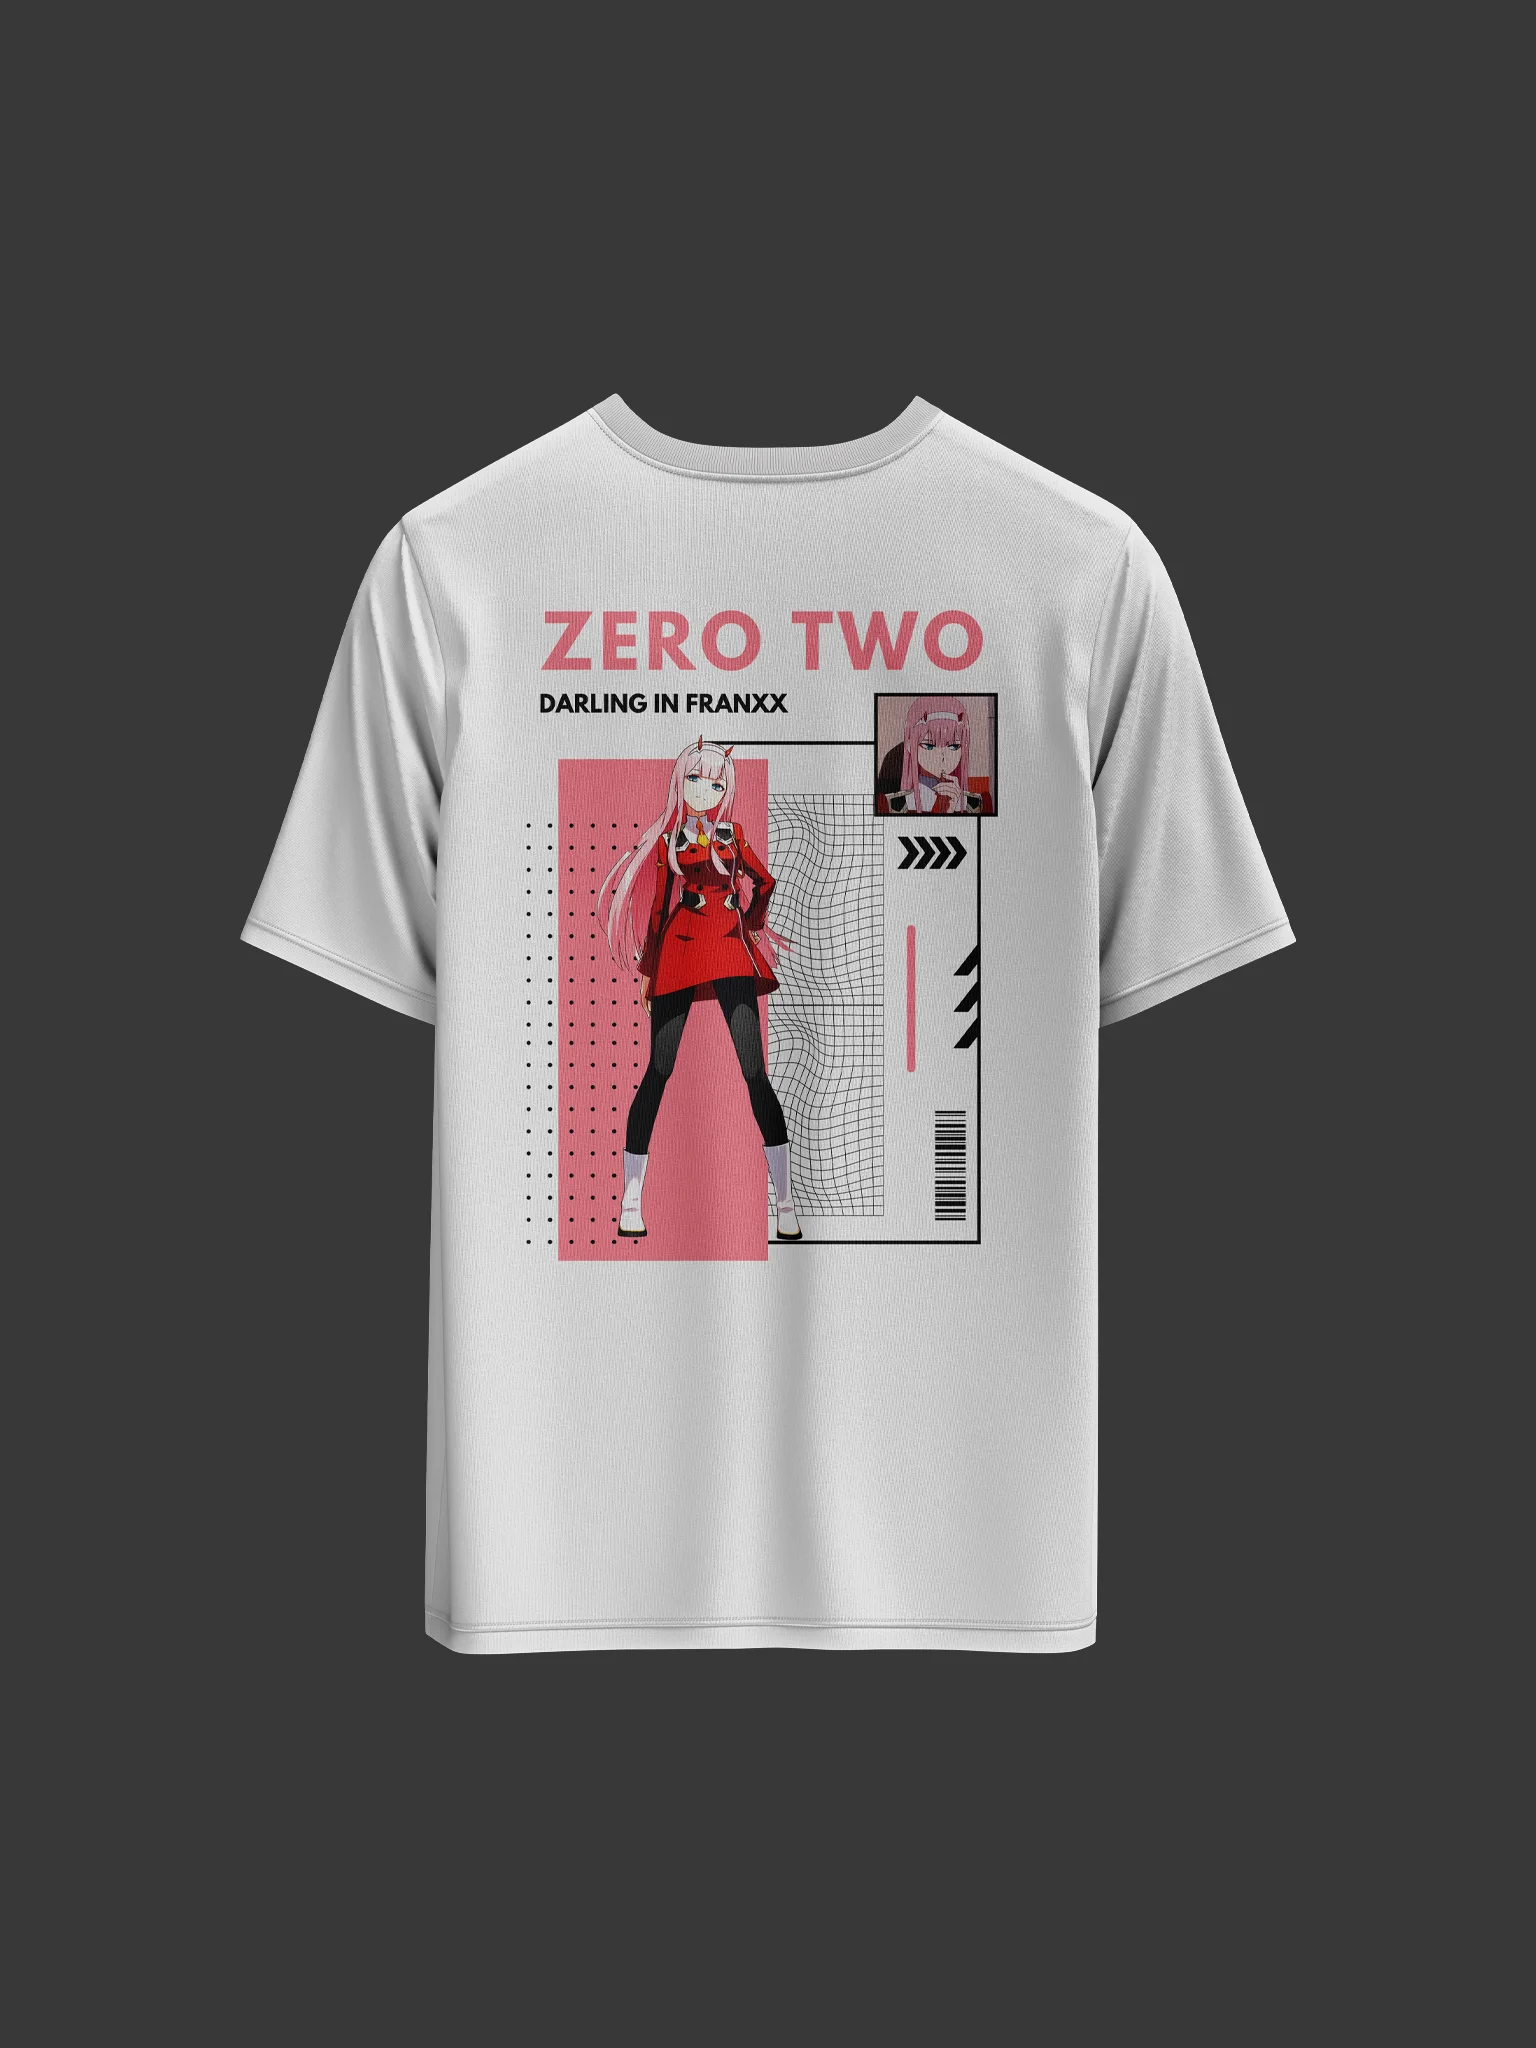 Zero Two - Darling In The Franxx - T-Shirt